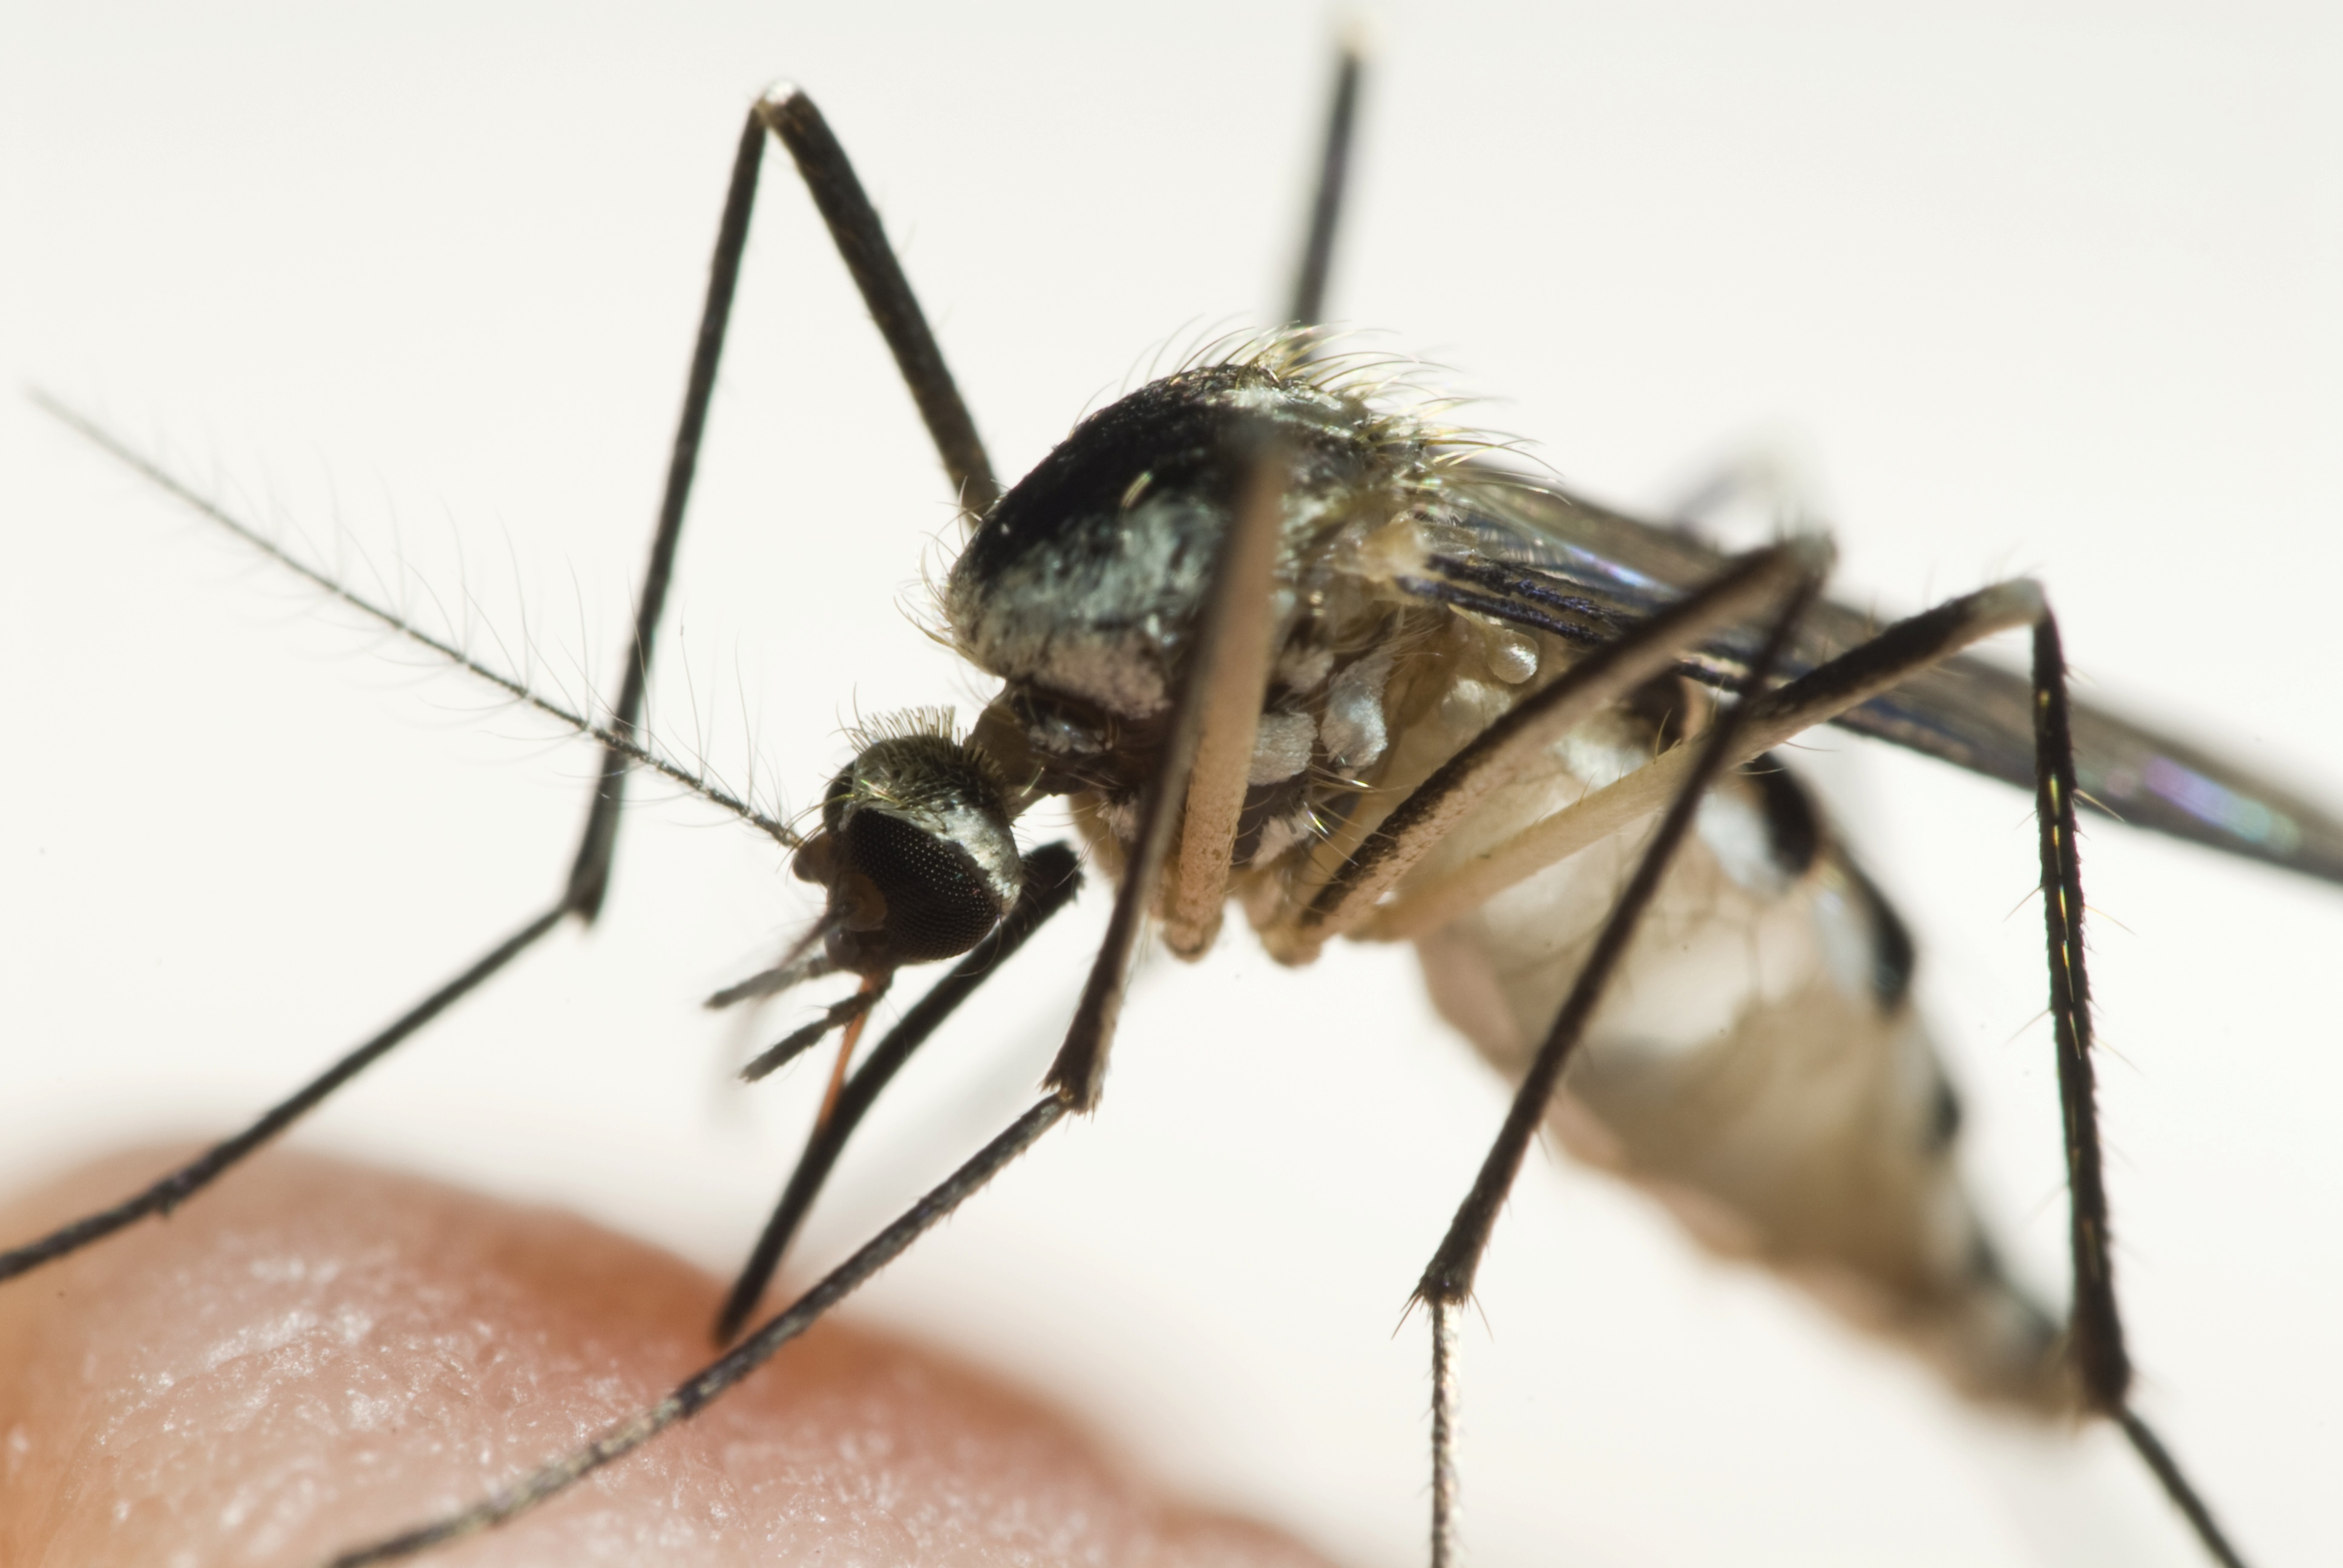 An Aedes triseriatus mosquito found prior to providing Mosquito Control in Gainesville.